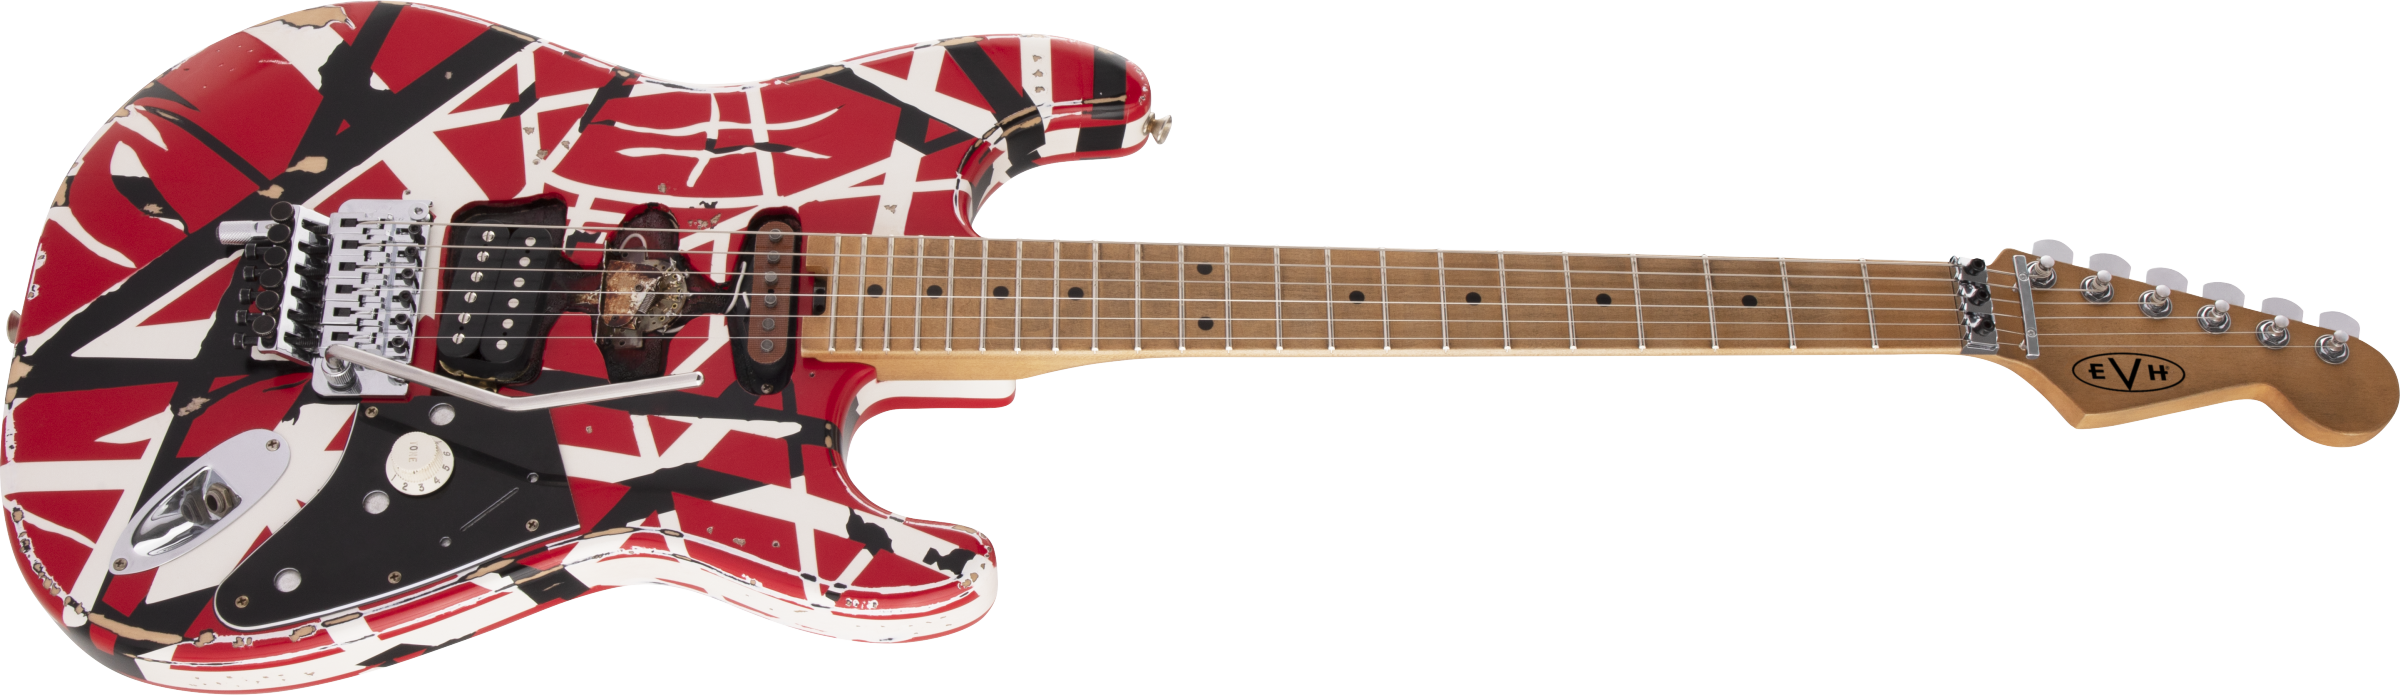 Evh Eddie Van Halen Frankenstein Frankie Striped Series Mex H Fr Mn - Red With Black & White Stripes - Str shape electric guitar - Variation 2